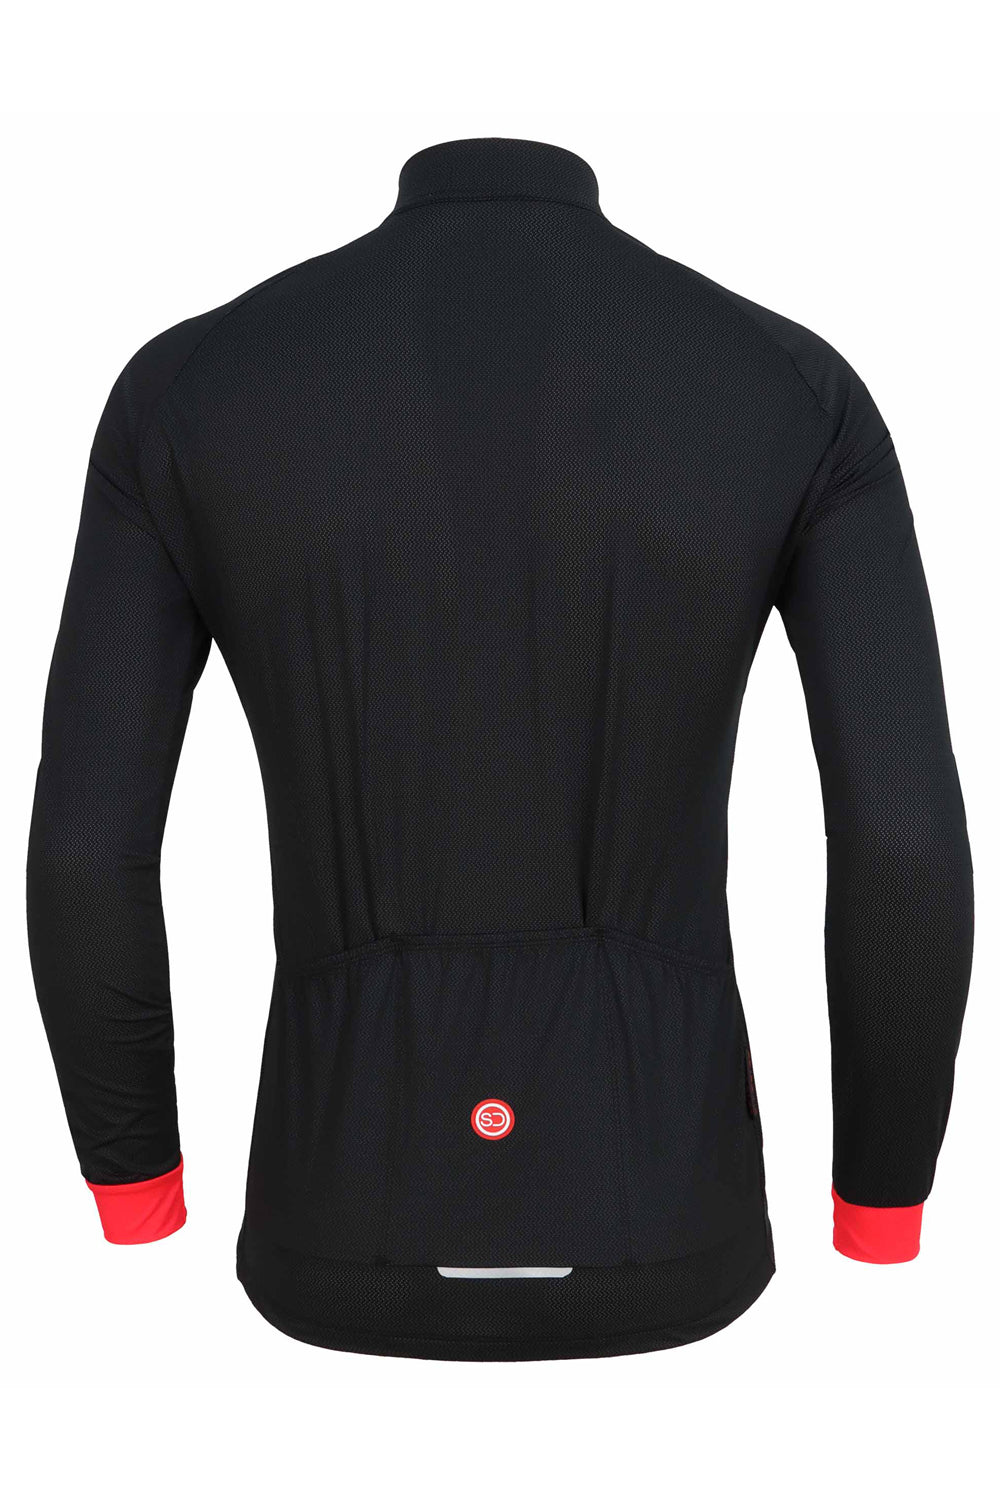 Sundried Apex Men's Long Sleeve Jersey Long Sleeve Jersey Activewear